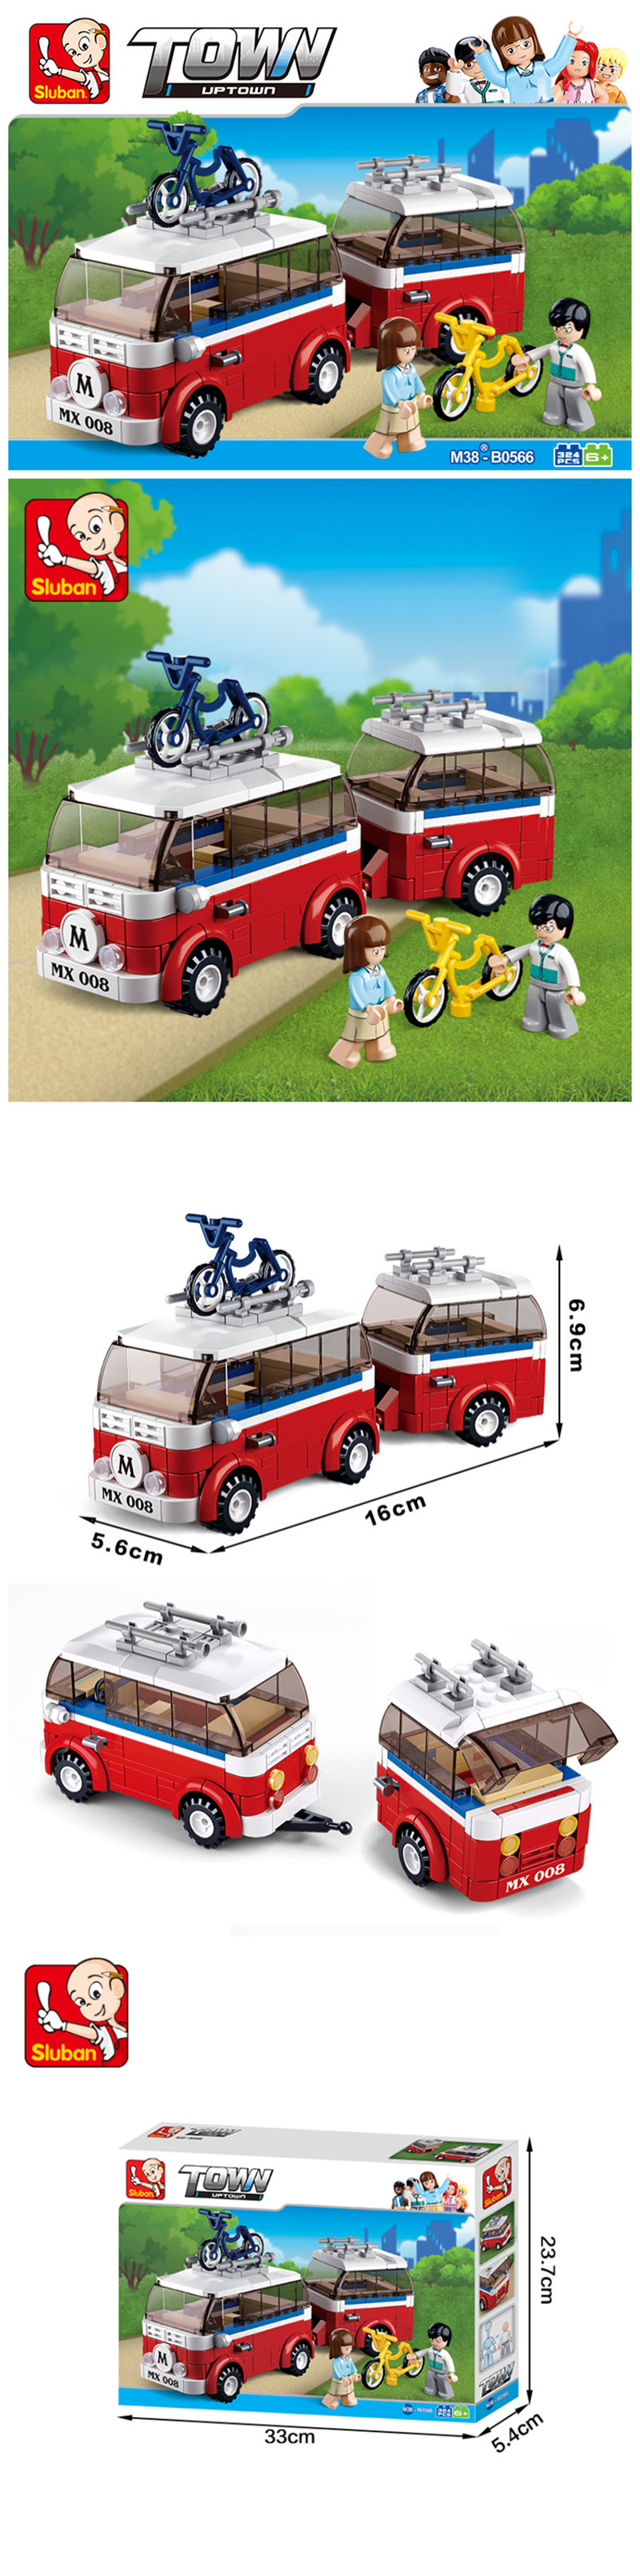 Sluban Building Blocks Educational Kids Toy Camper